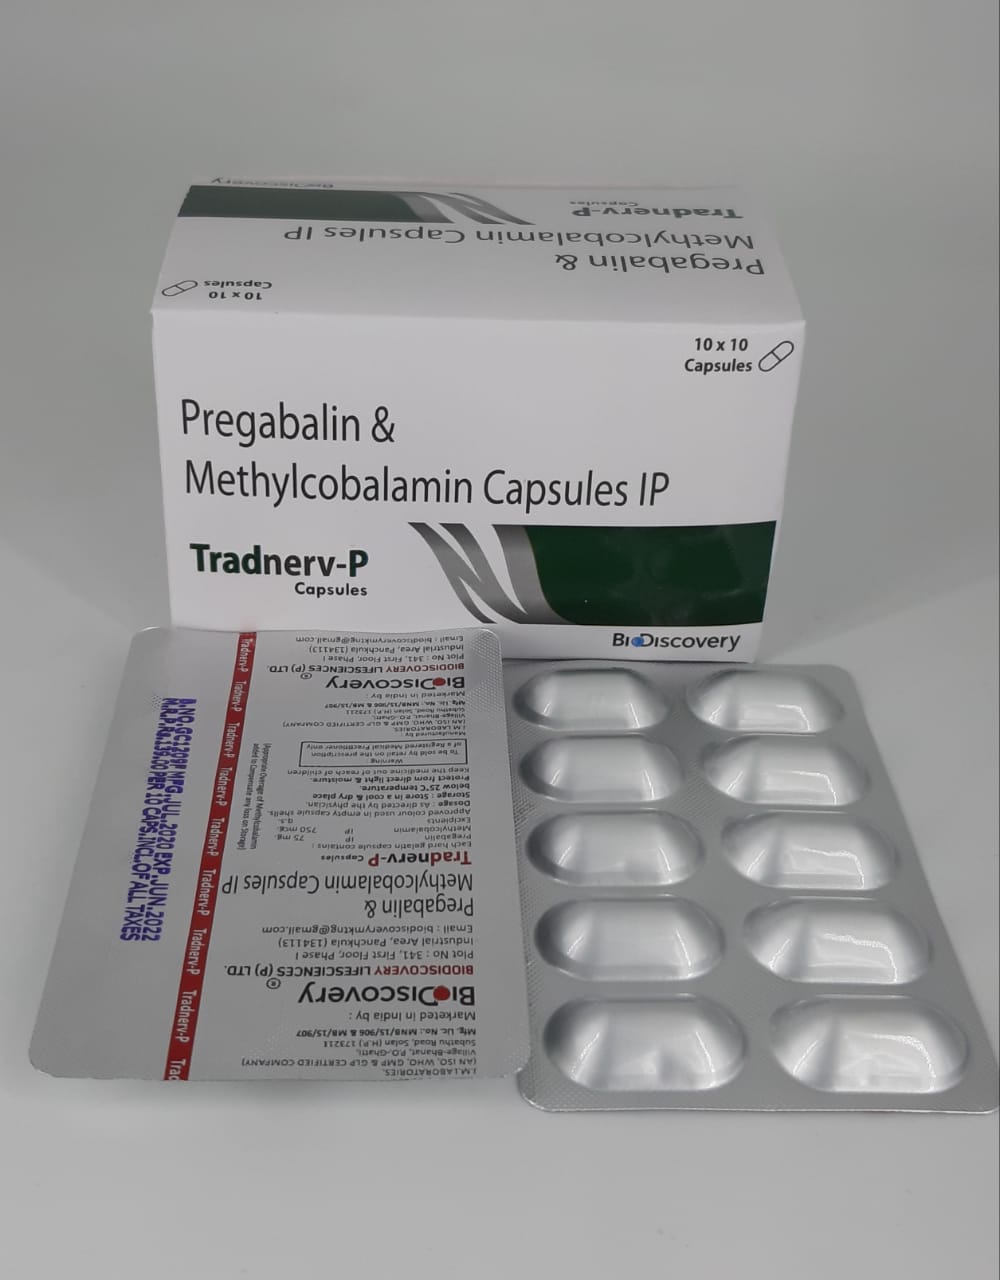 Product Name: Tradnerv P, Compositions of Tradnerv P are Pregabalin & Methylcobalamin Capsules IP - Biodiscovery Lifesciences Pvt Ltd